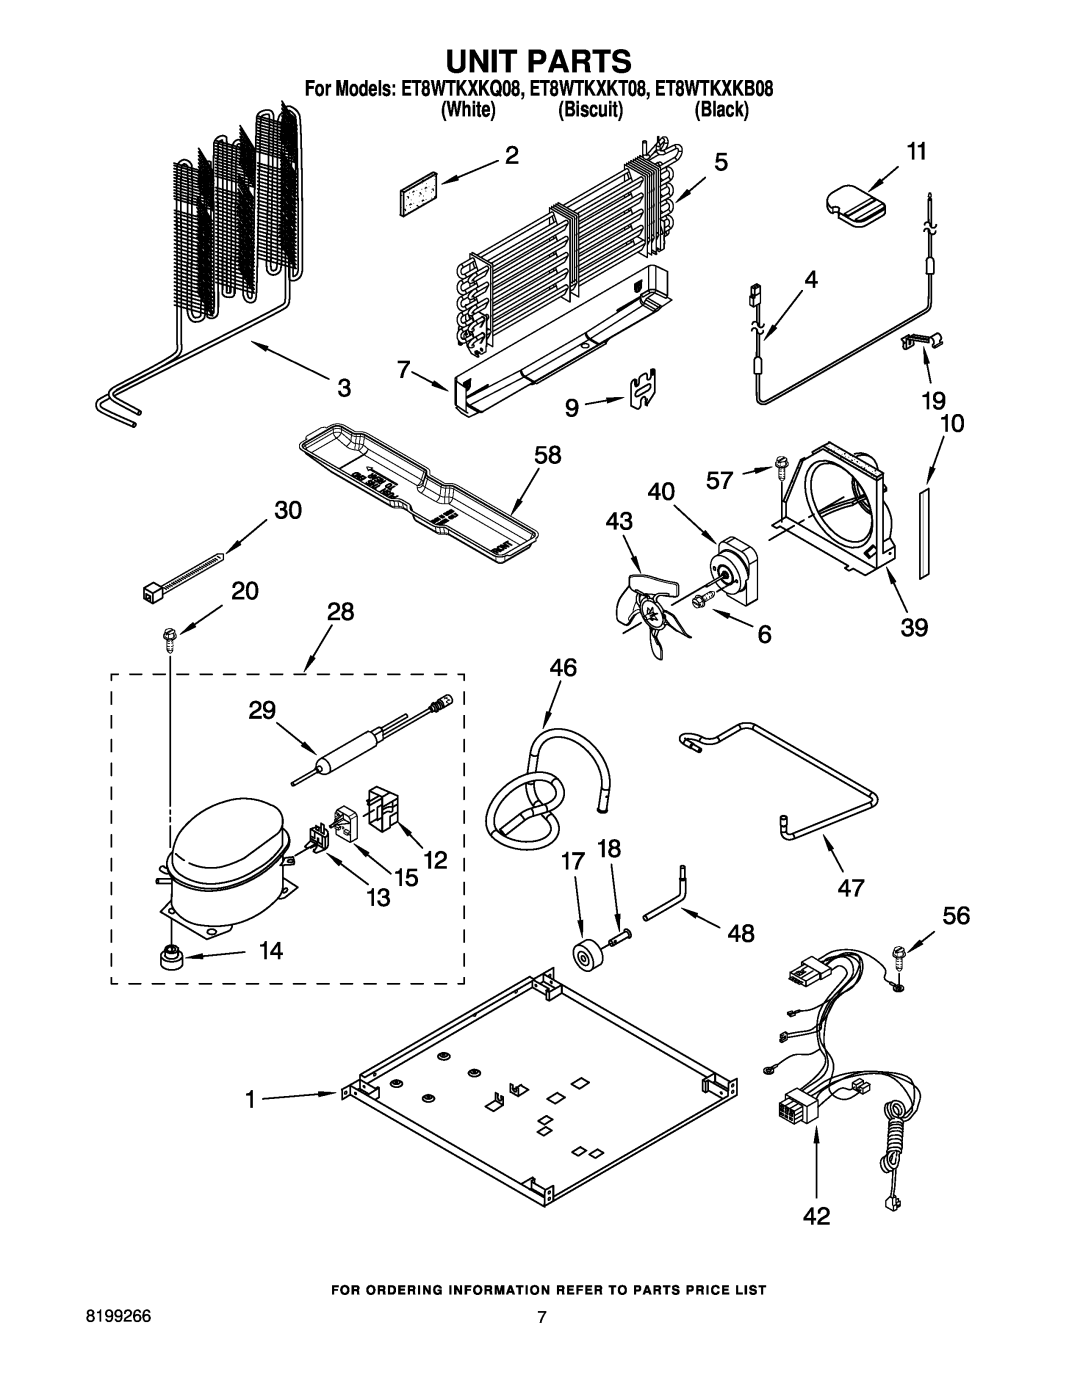 Whirlpool manual Unit Parts, For Models ET8WTKXKQ08, ET8WTKXKT08, ET8WTKXKB08 White Biscuit Black 